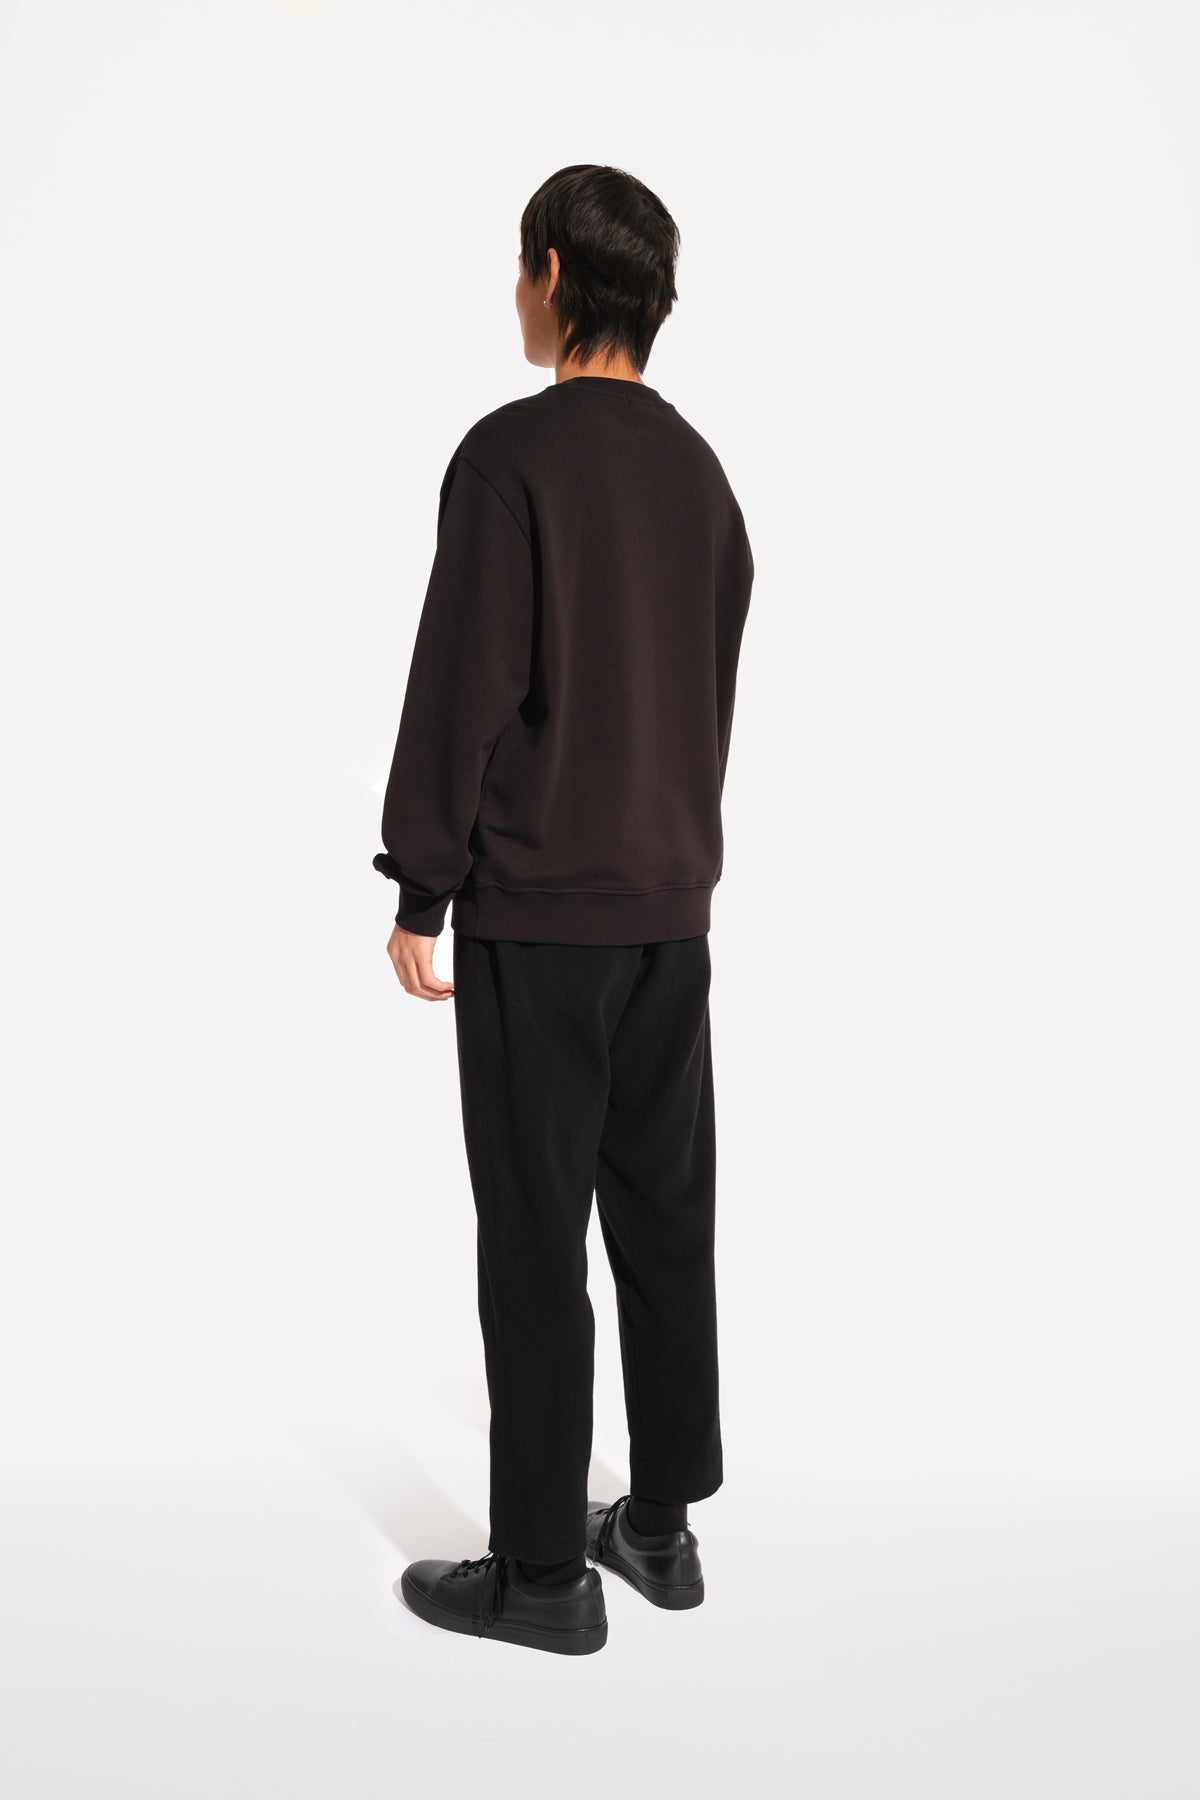 oftt - 02- reversible sweatshirt - black - organic cotton fleece - image 3